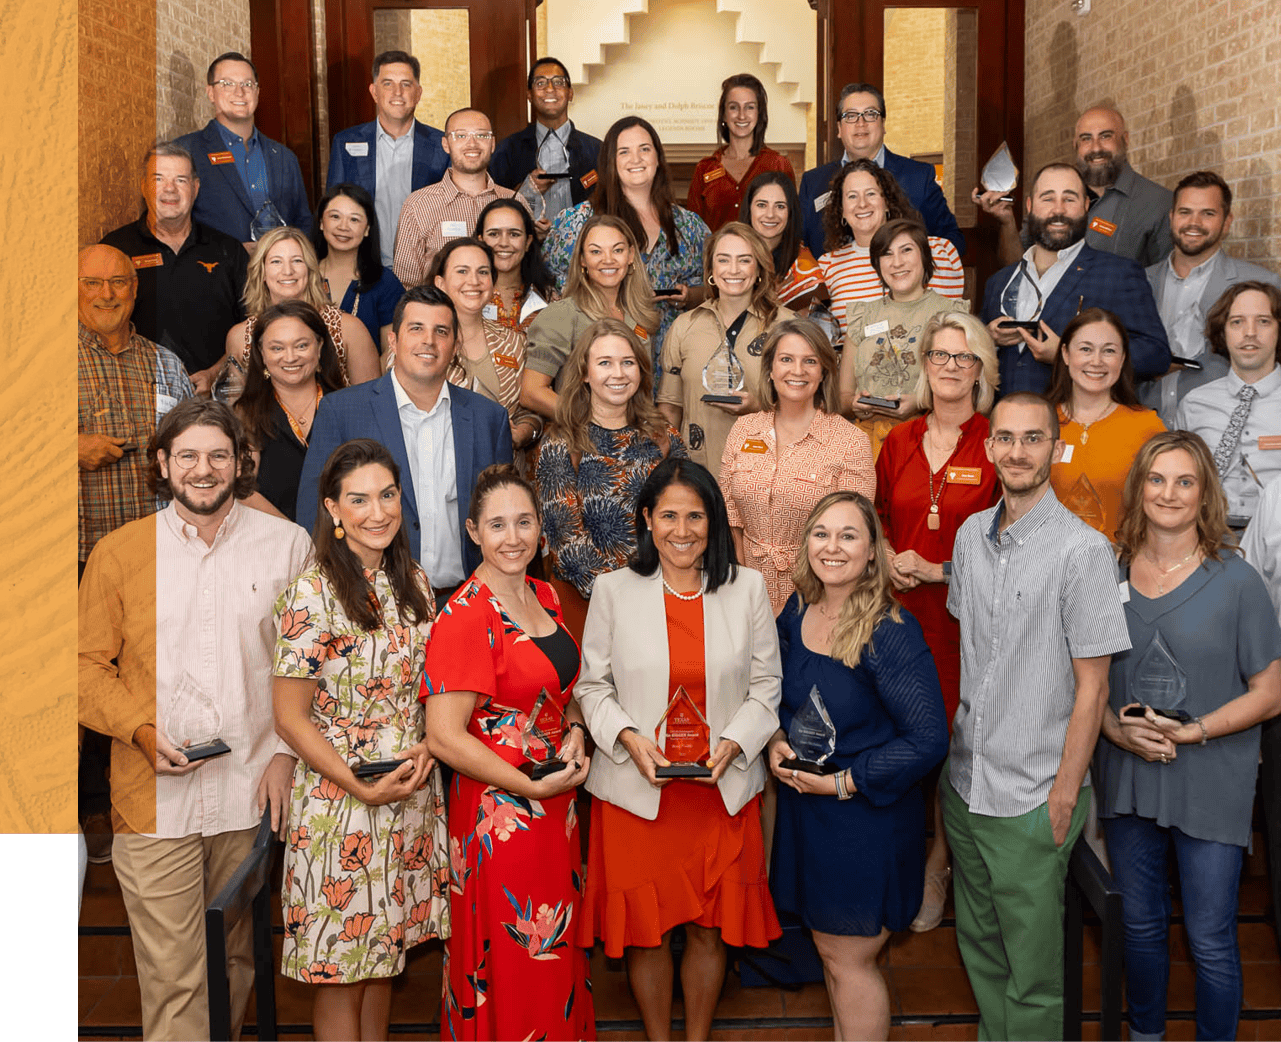 A Texas Development team photo Celebrating Our Success